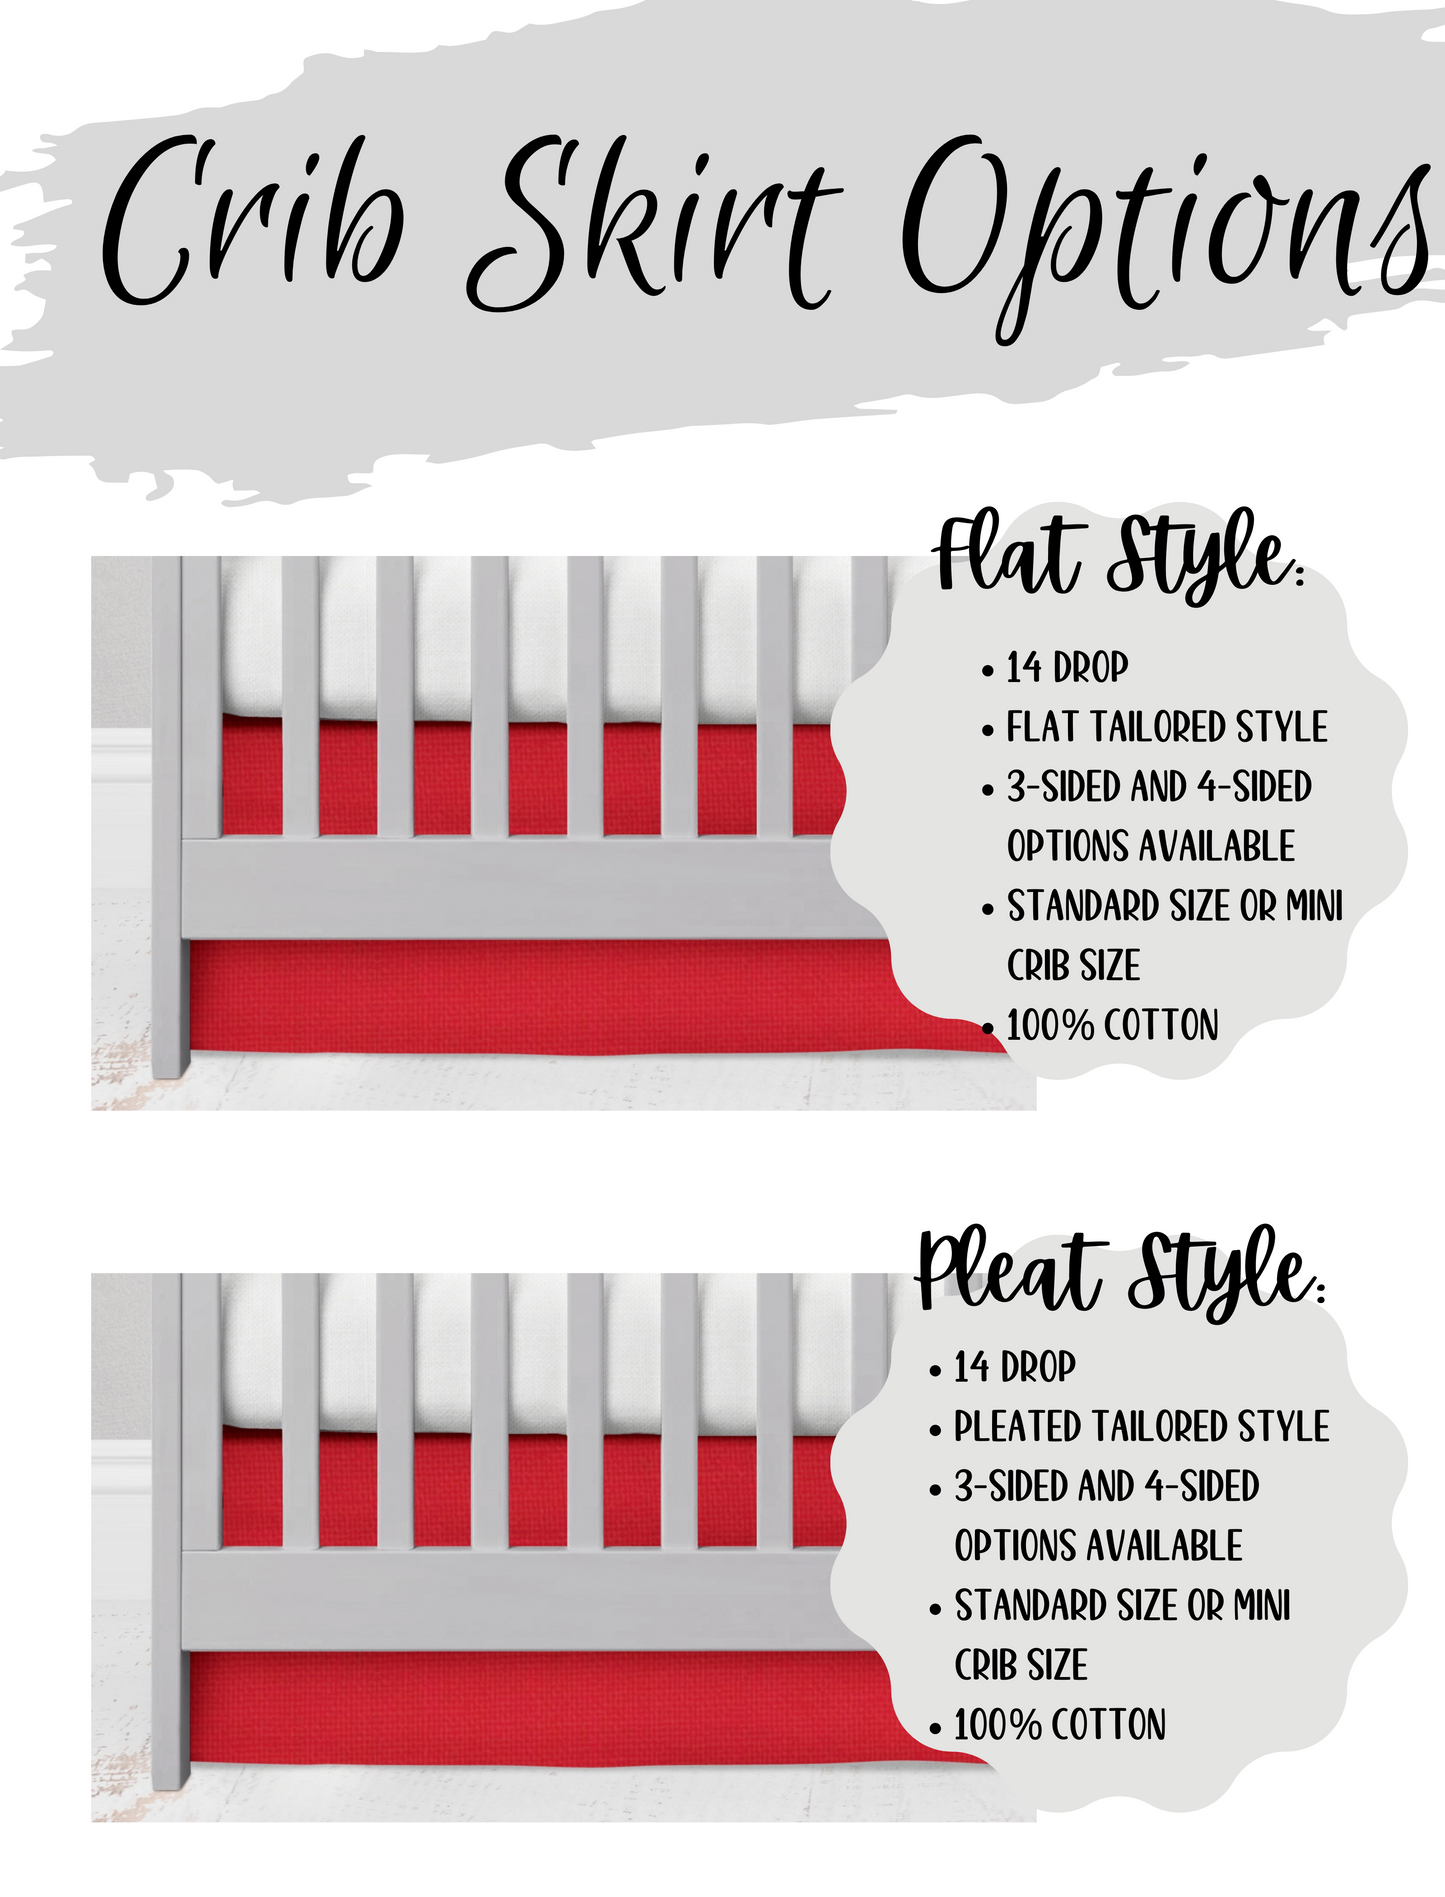 crib skirt styles - flat or pleat 